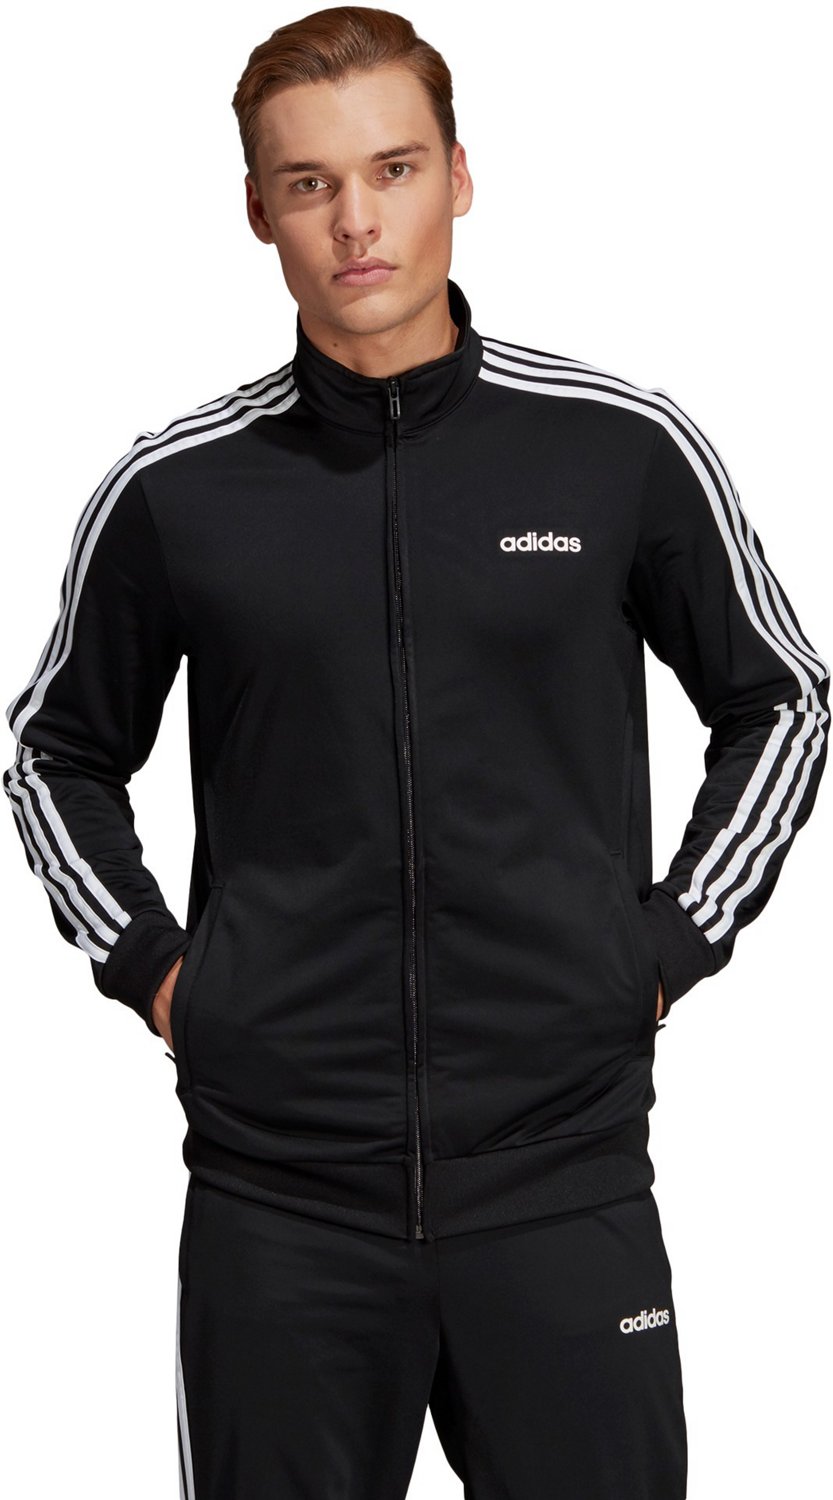 adidas jacket black with white stripes